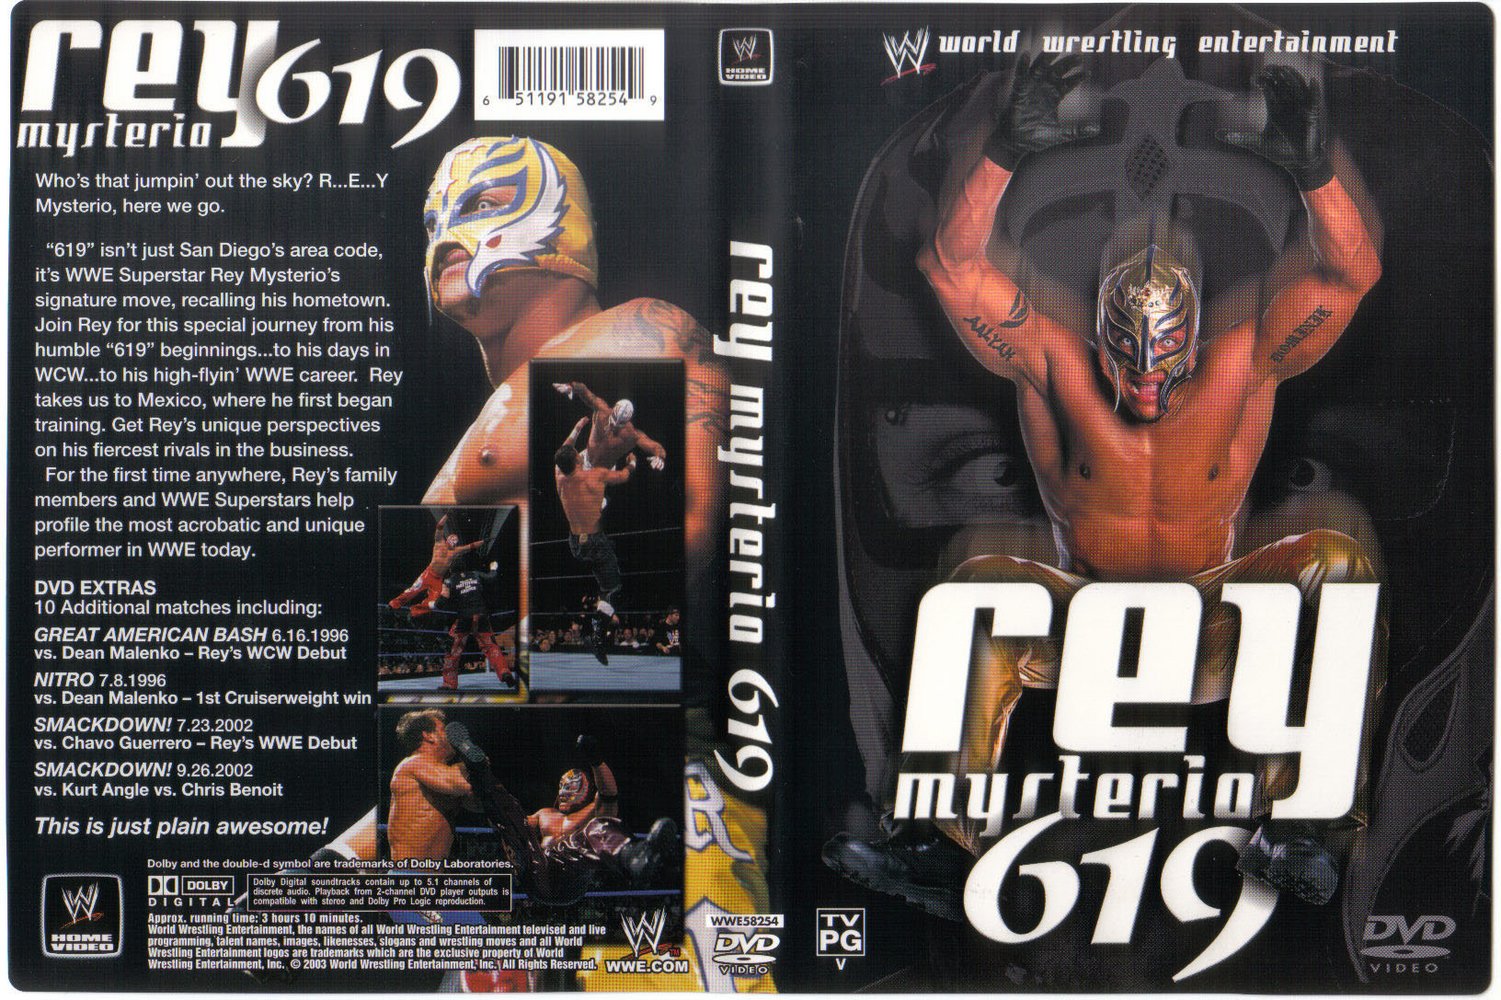 Jaquette DVD WWE Rey Mysterio 619